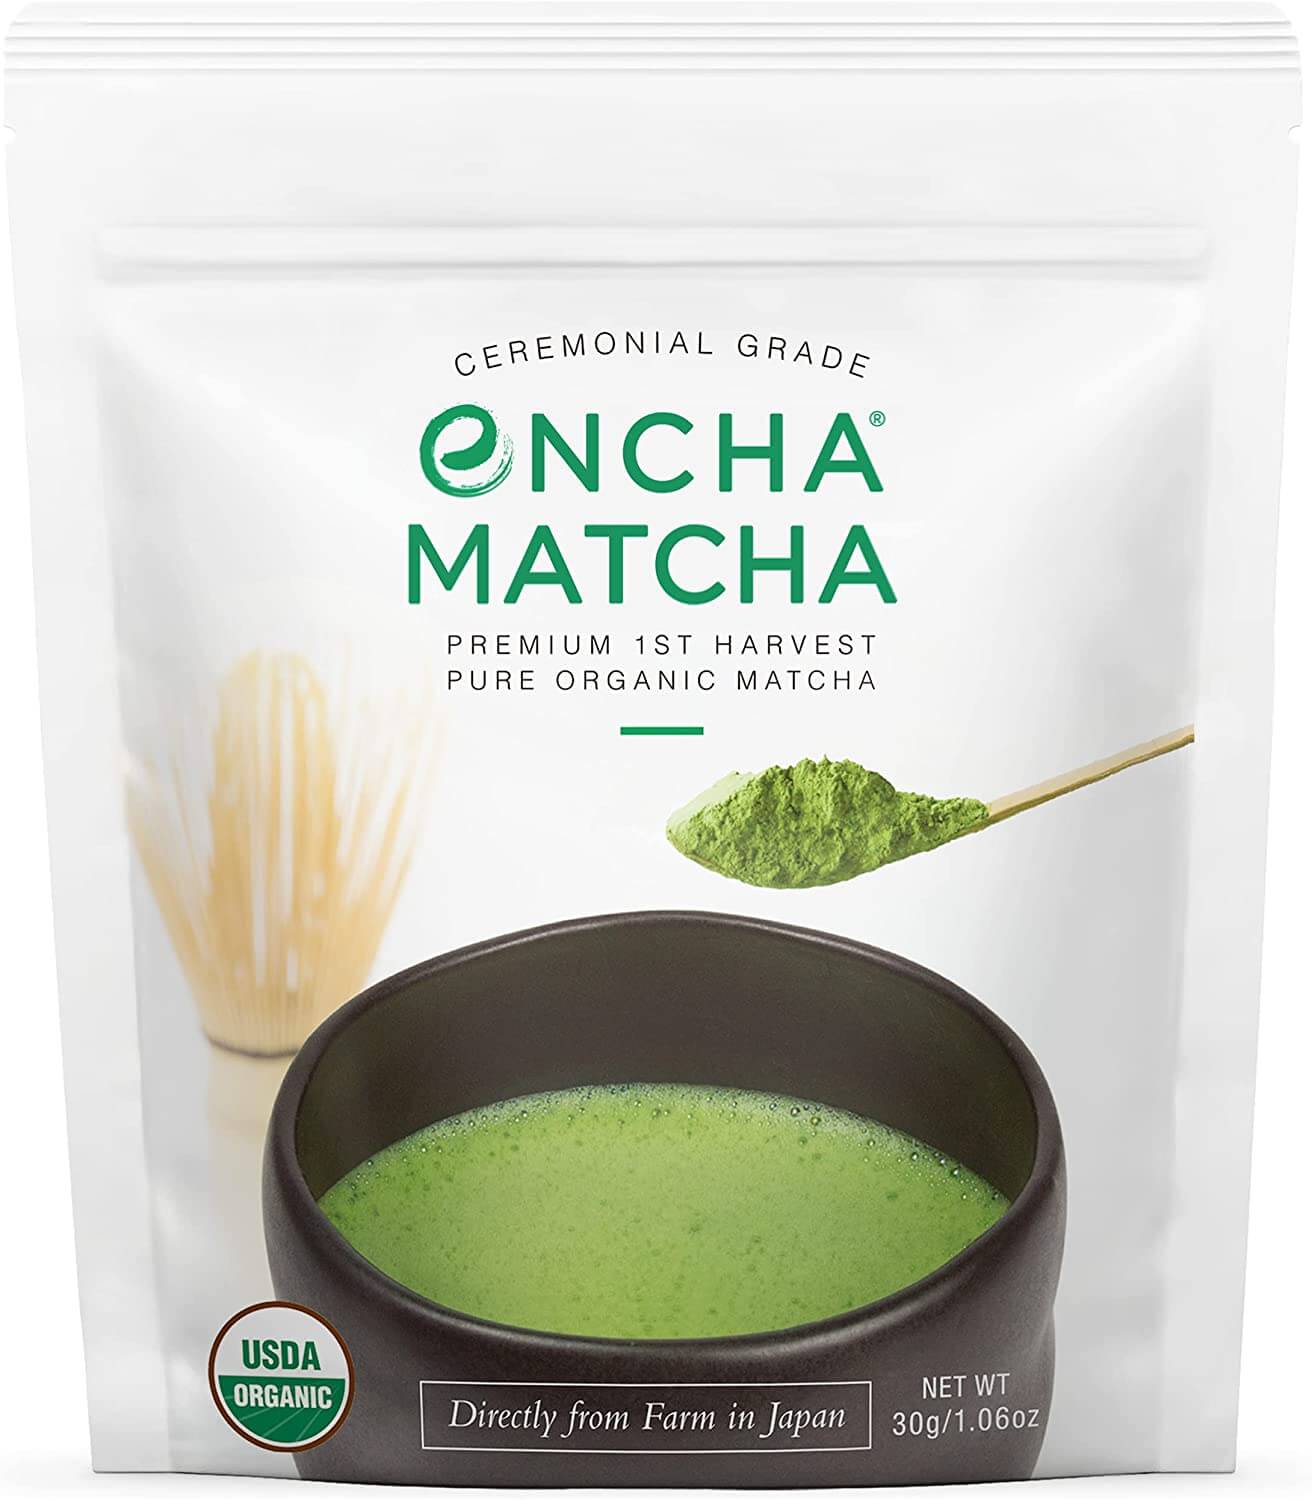 Encha Ceremonial Grade Matcha Green Tea - First Harvest Organic Japanese Matcha Green Tea Powder, From Uji, Japan (60g/2.12oz)